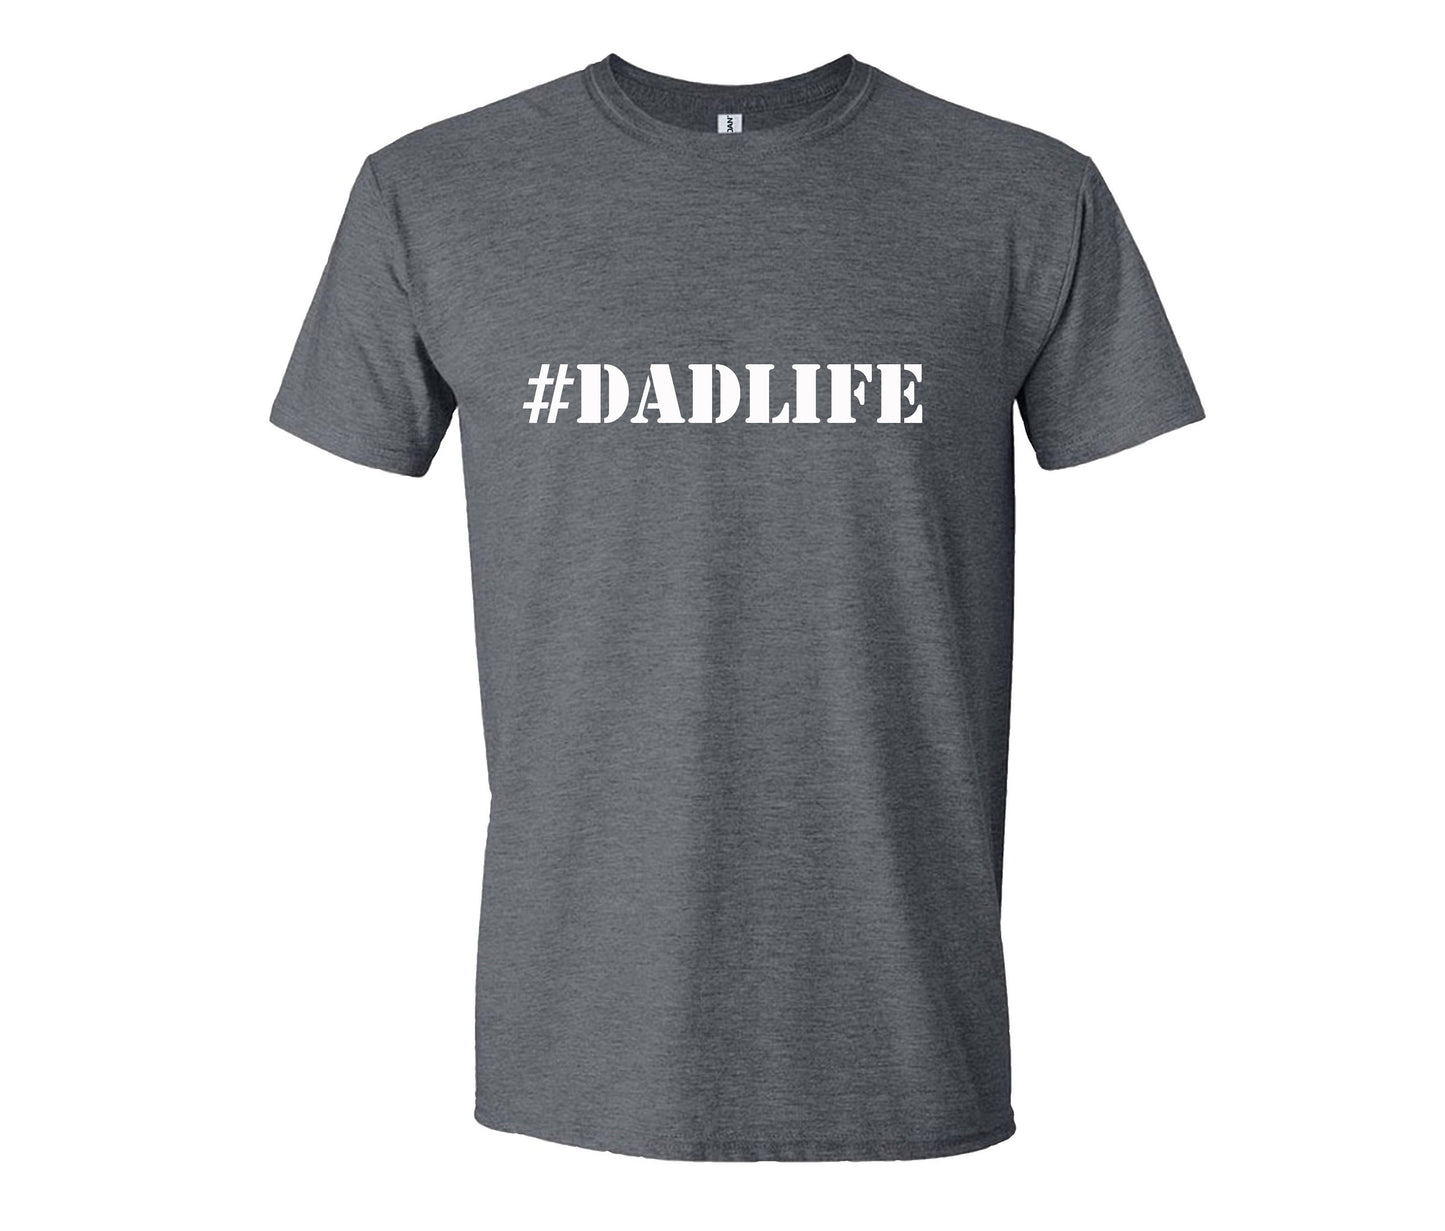 Dad life tshirt - Dad tshirt for Father's Day - Dad life is the best life - Father's Day gift for new dad - New Dad shirt -